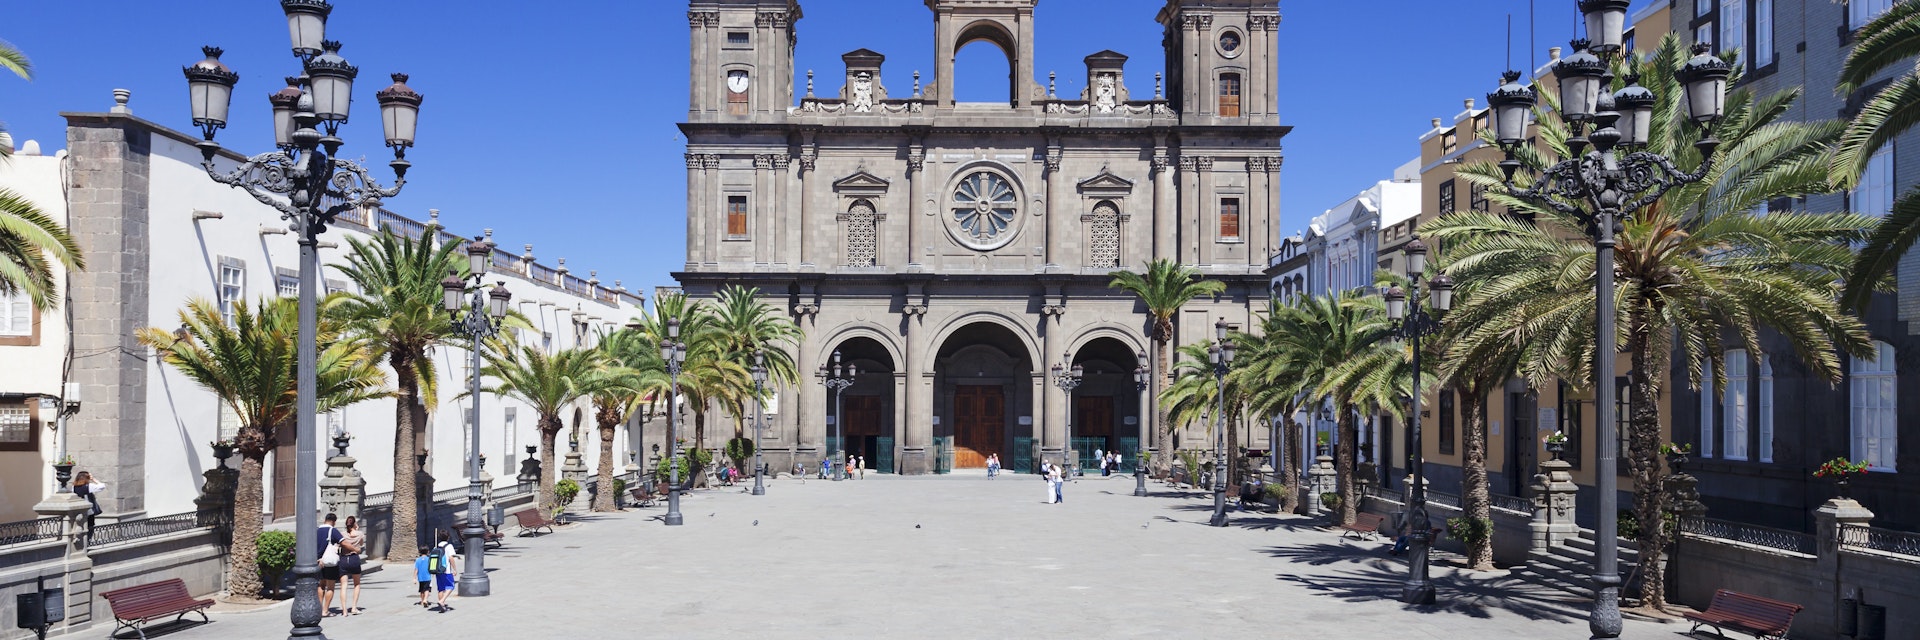 Santa Ana Cathedral, Plaza Santa Ana, Vegueta Old Town, Las Palmas, Gran Canaria, Canary Islands, Spain, Europe